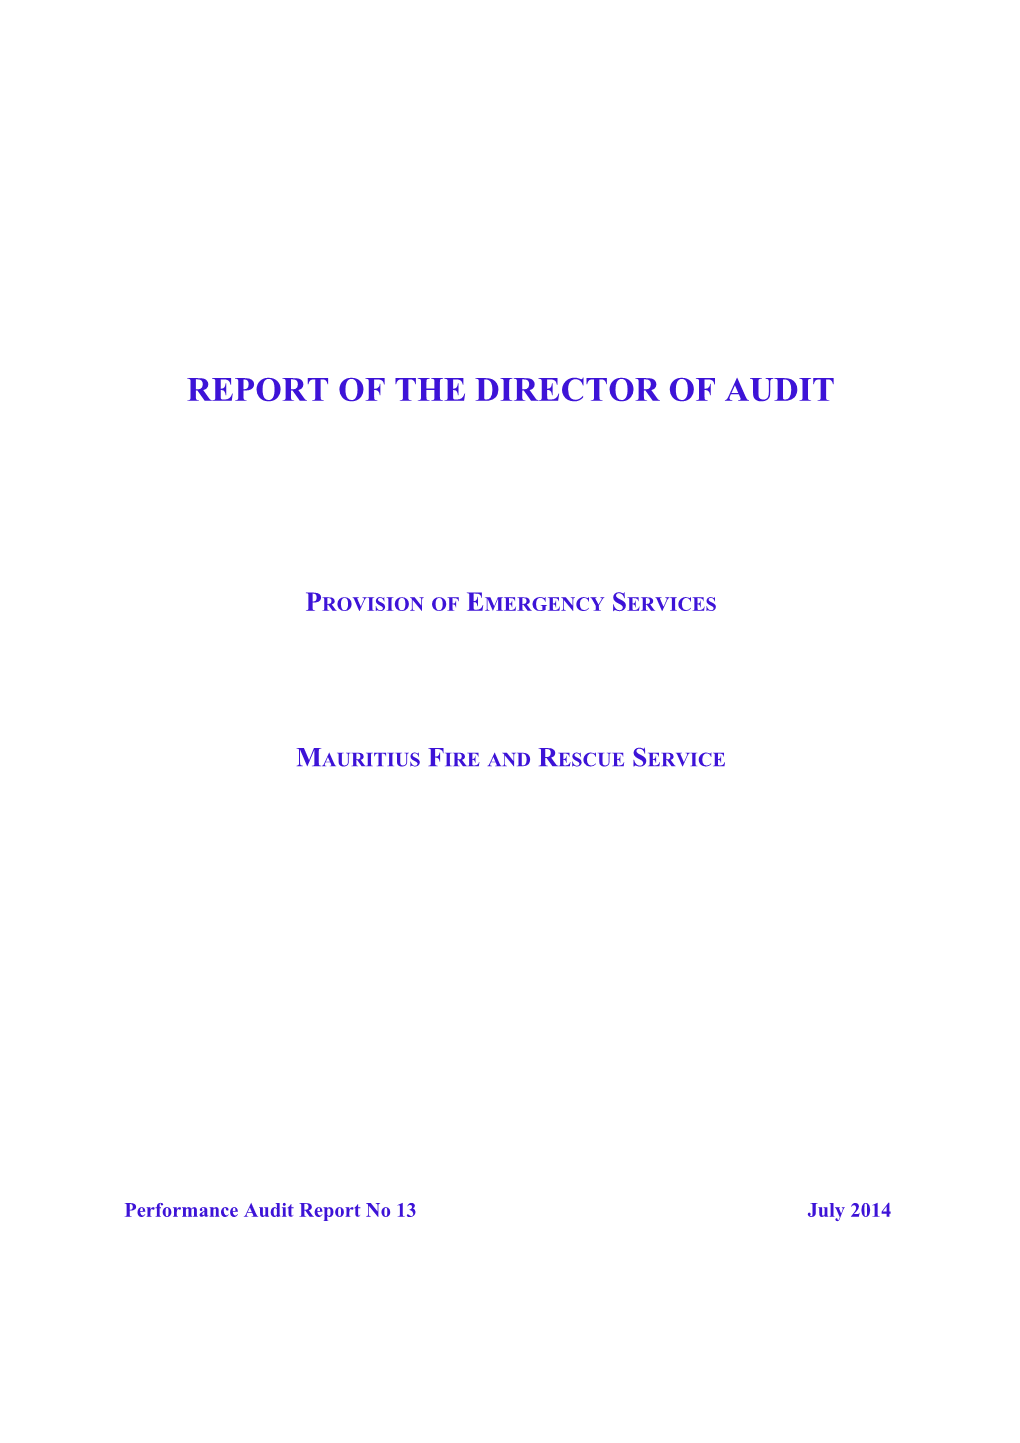 Draft Performance Audit Report